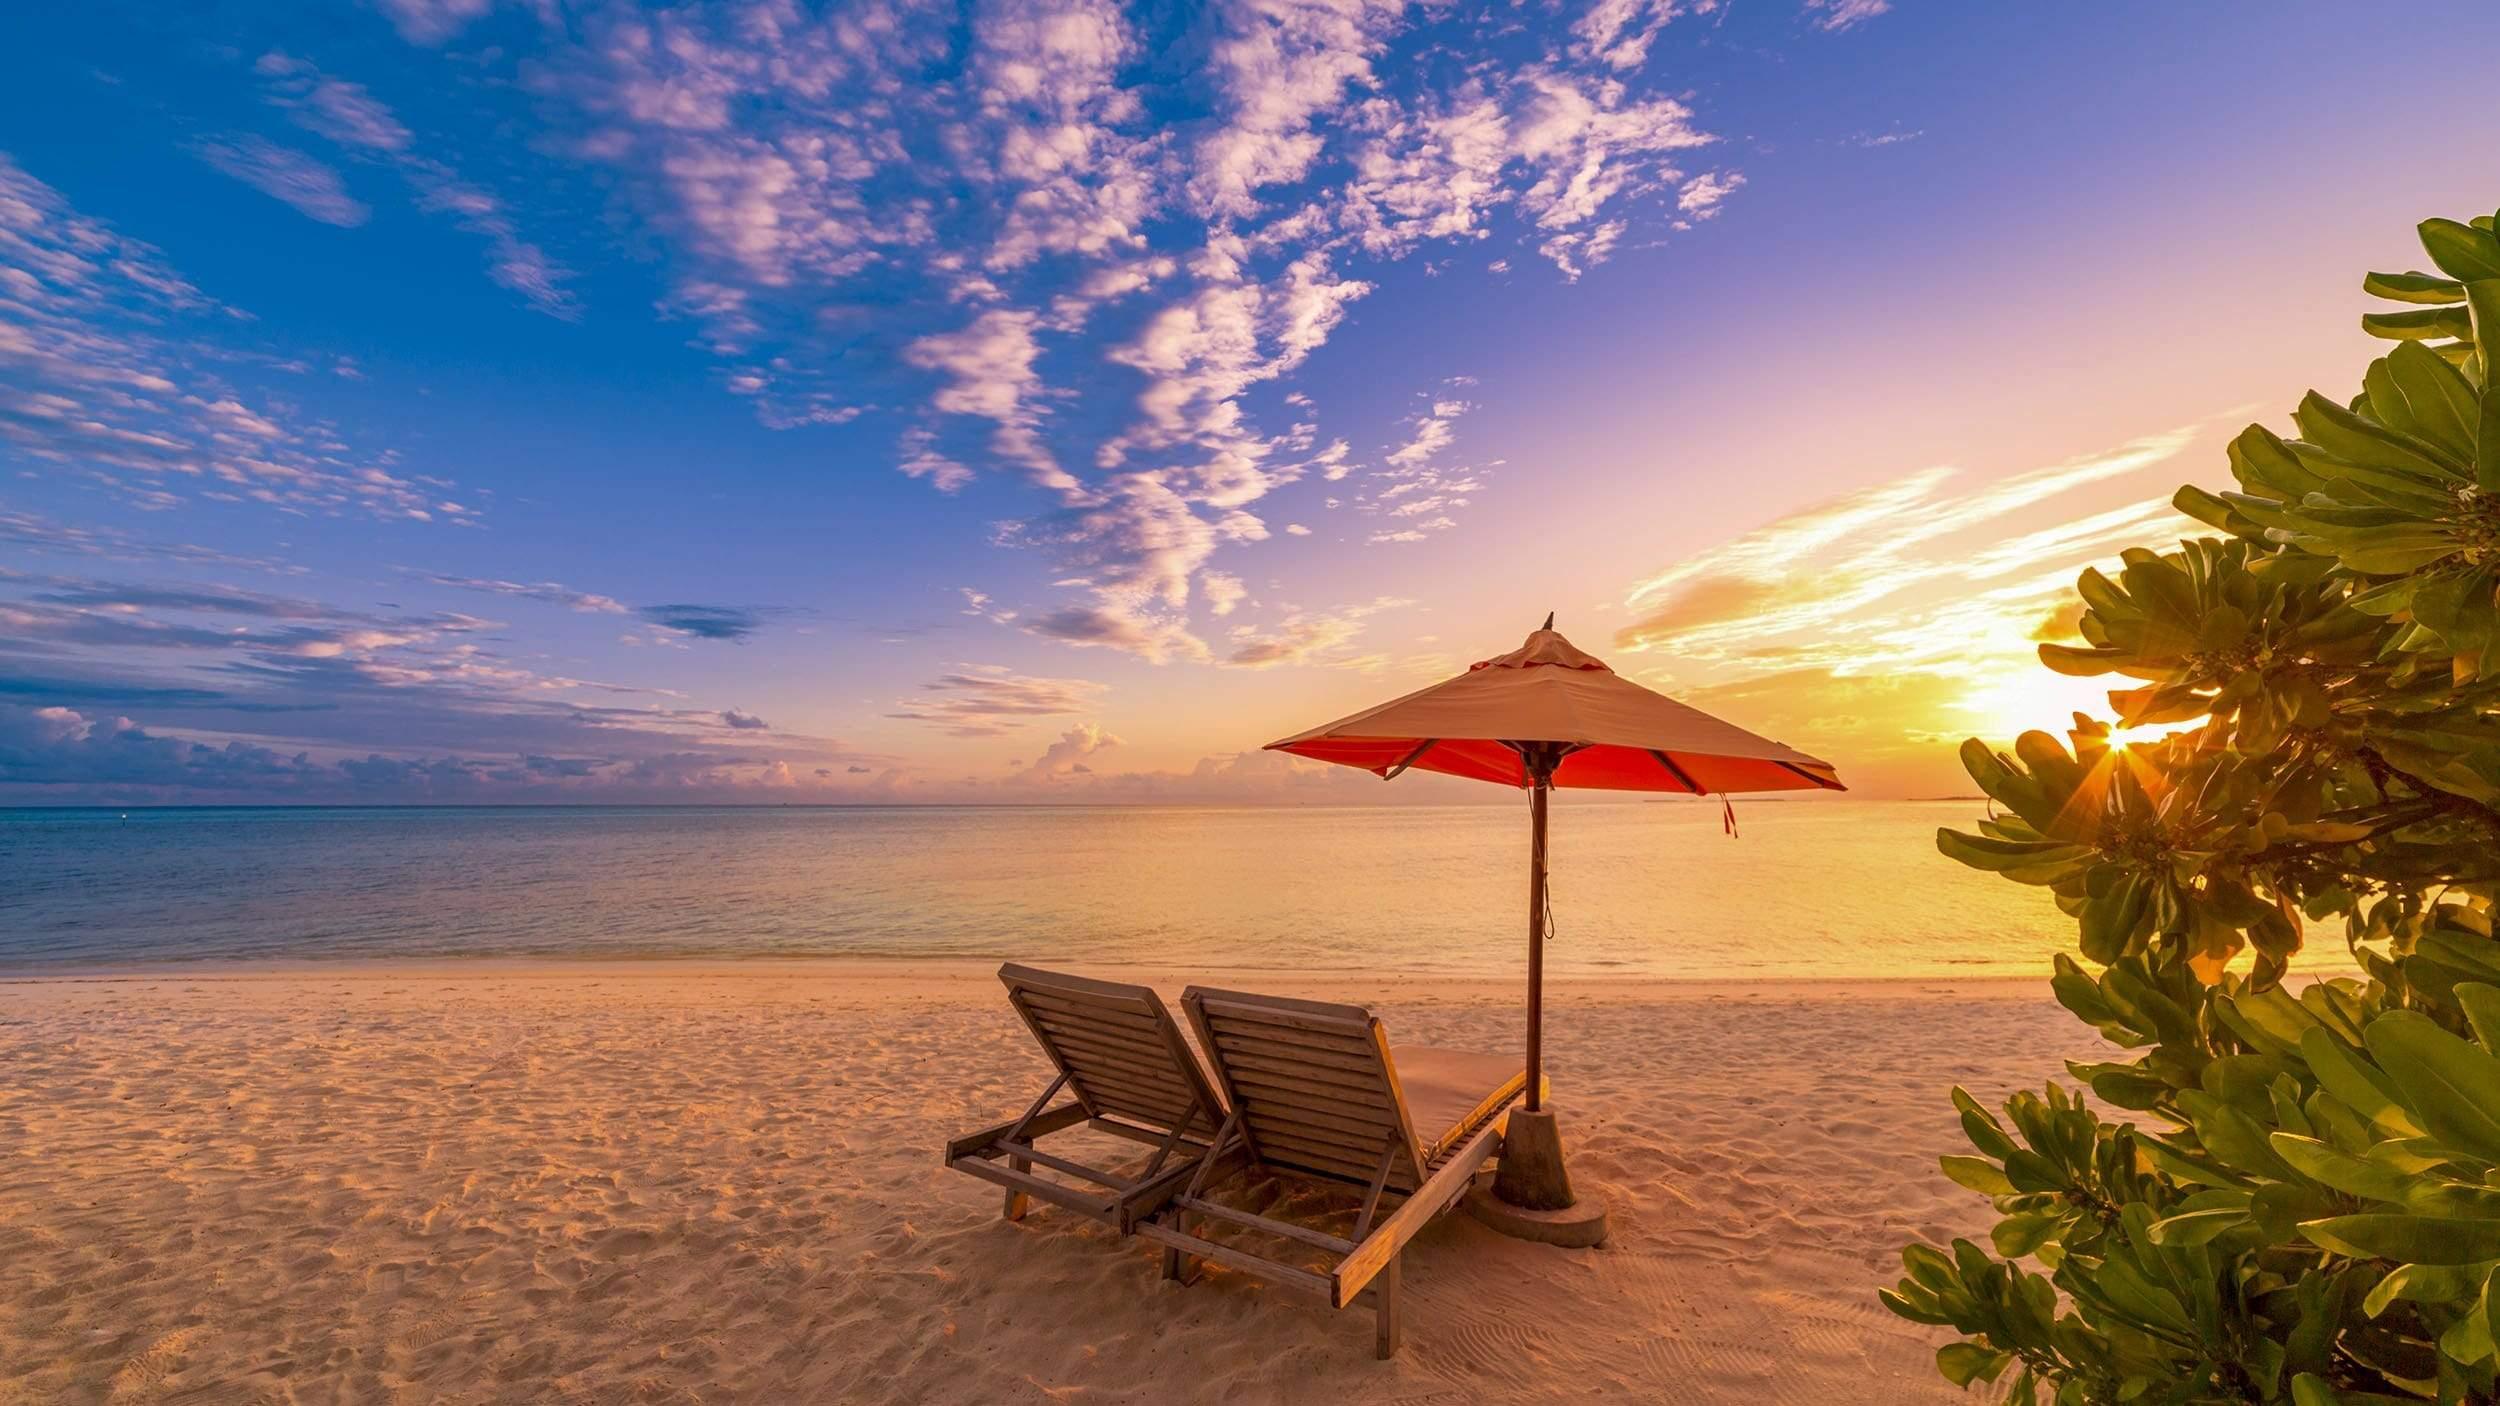 Two chairs under umbrella on sandy beach sunset